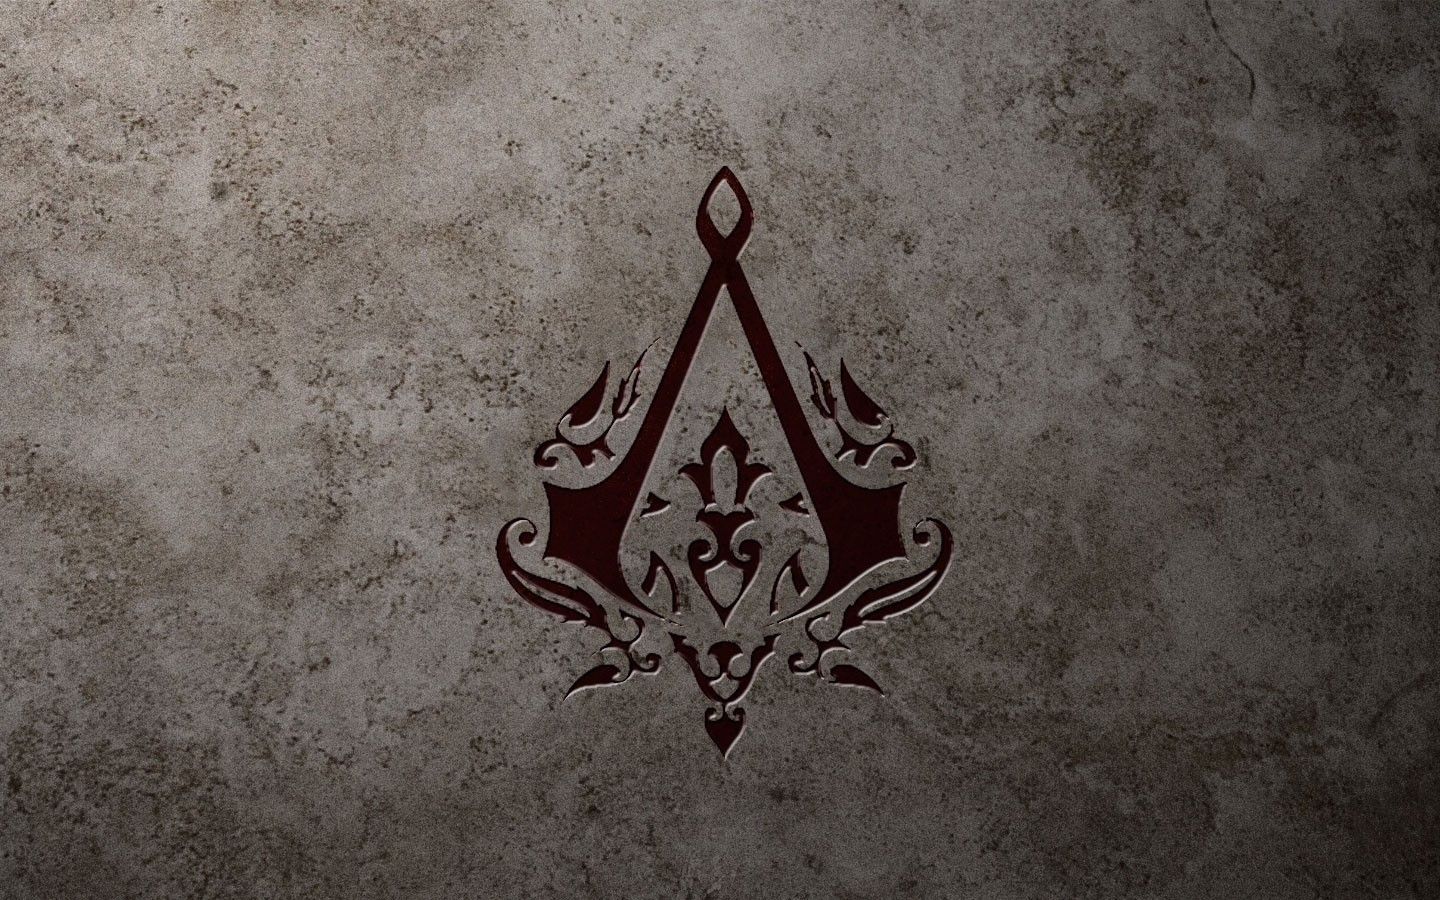 assassin's creed logo 4k wallpaper download